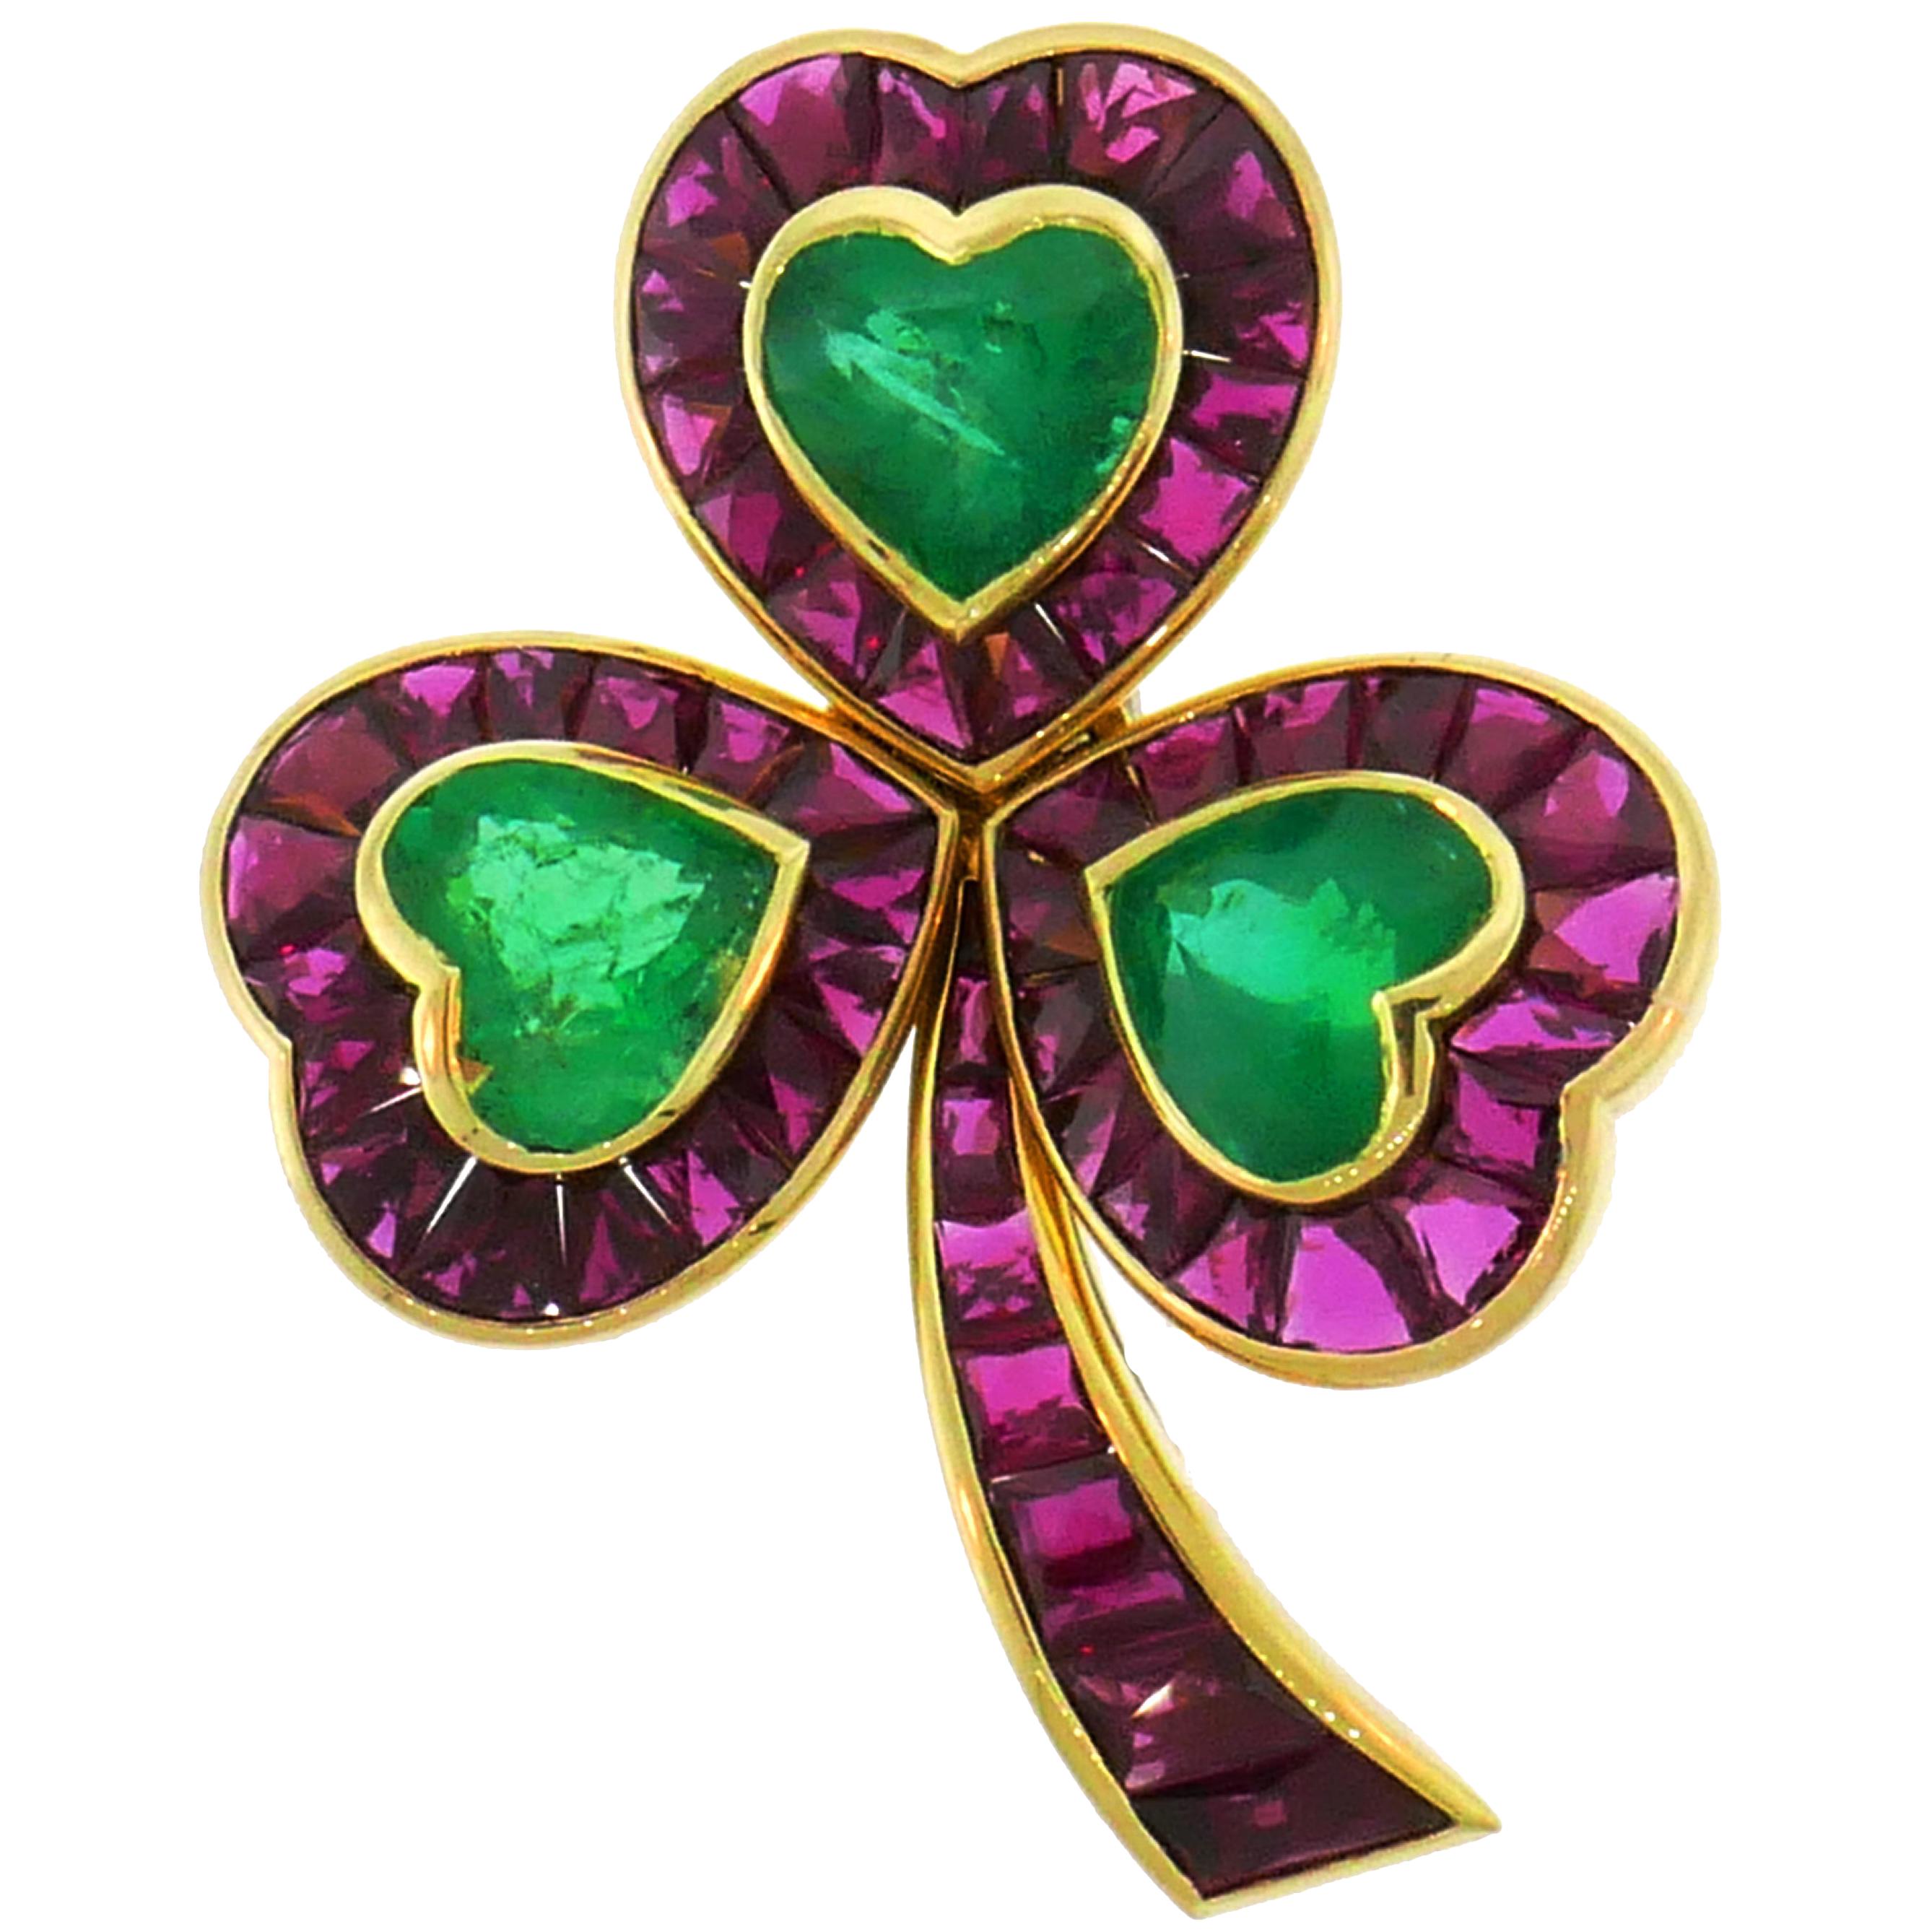 Hemmerle Ruby Emerald Gold Clover Clip Pin Brooch